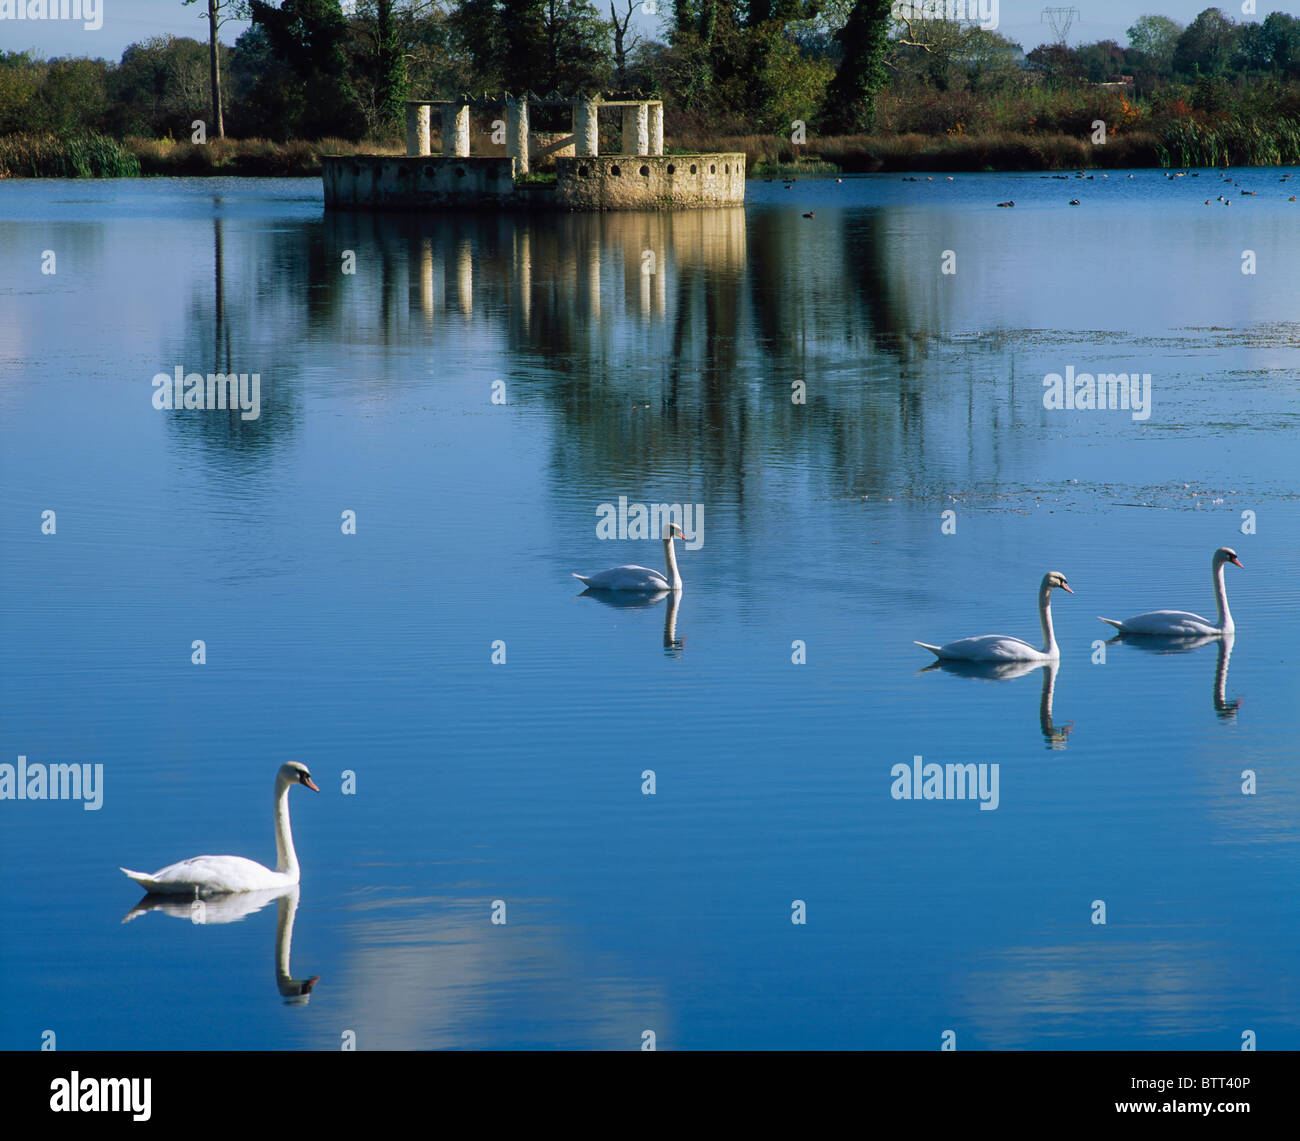 Swans And Lake Follies, Arcadian Gardens, Co Kildare, Ireland Stock Photo